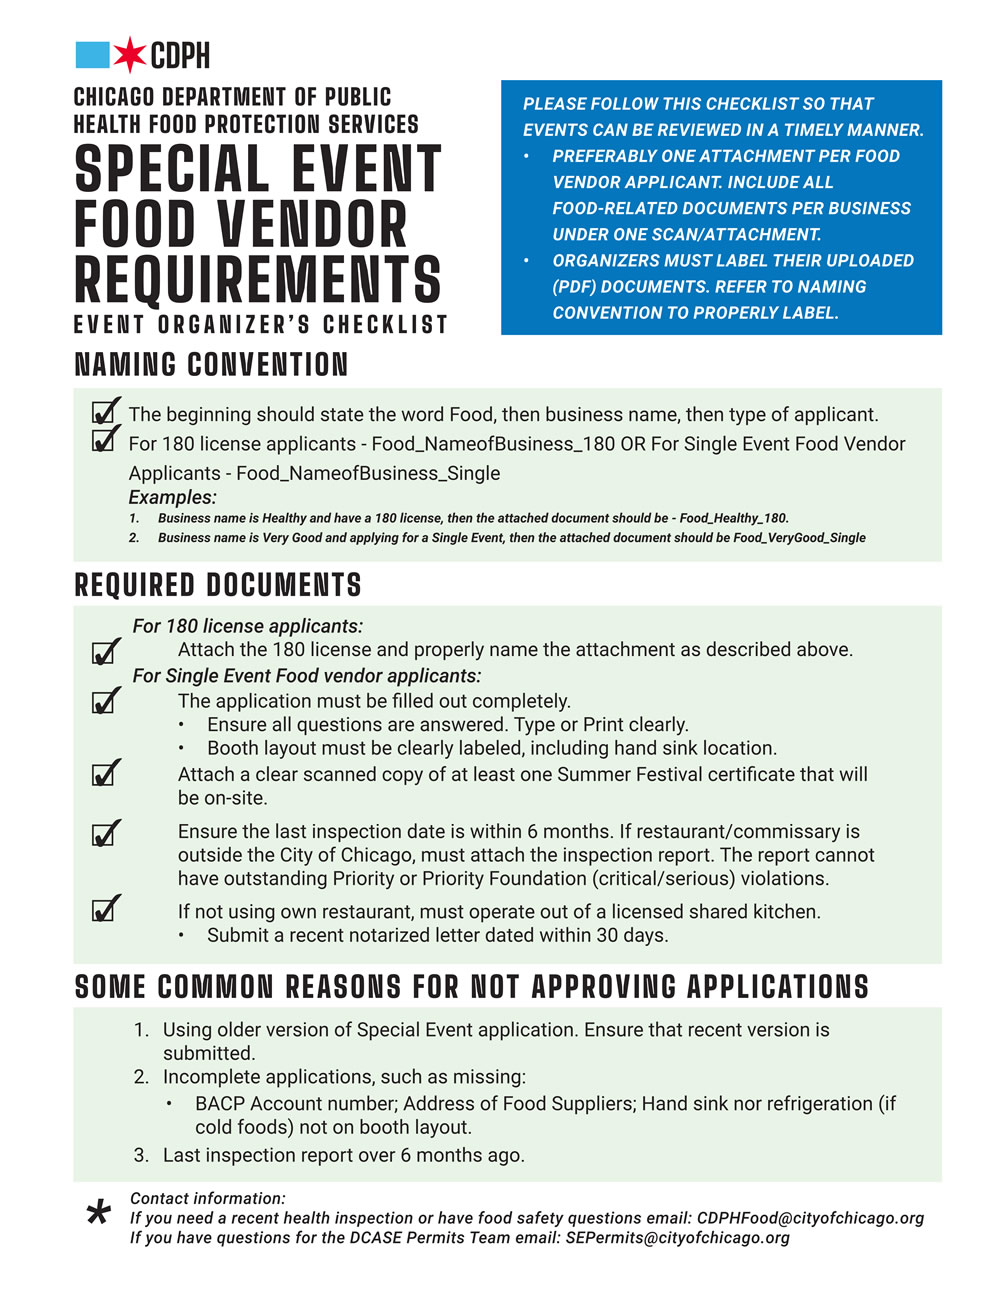 Special Event Food Vendor Requirements Event Organizer's Checklist (PDF)